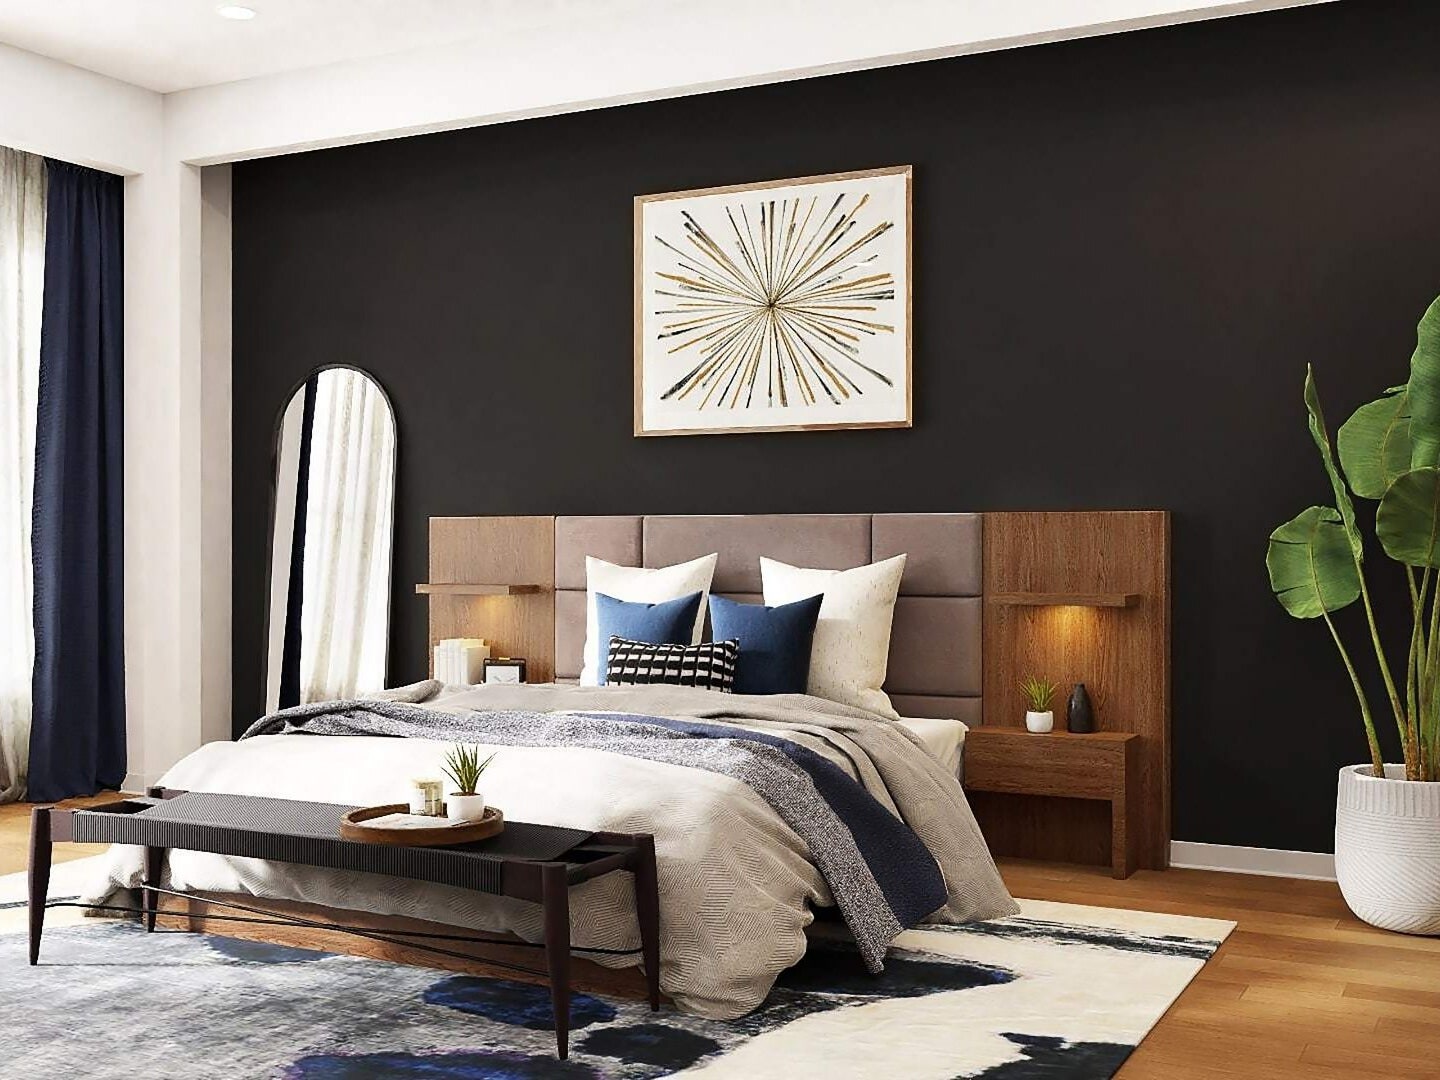 Bedroom Designs | Bedroom Interiors | Bedroom Decorating Ideas | Architectural Digest India